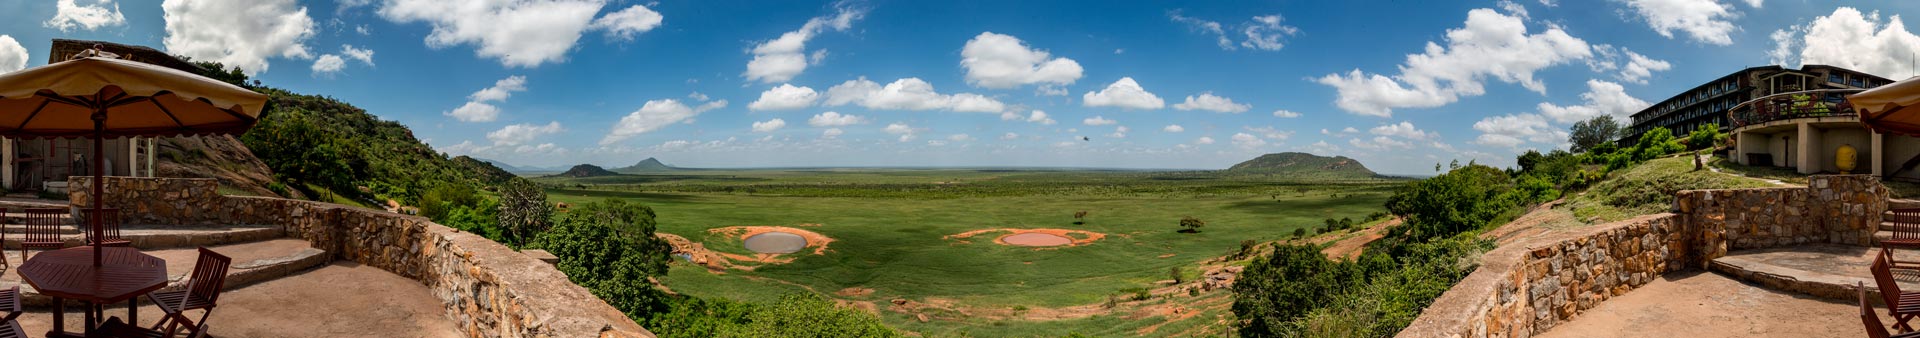 Panorama Voi Safari Lodge Kenia Reiseziel Afrika